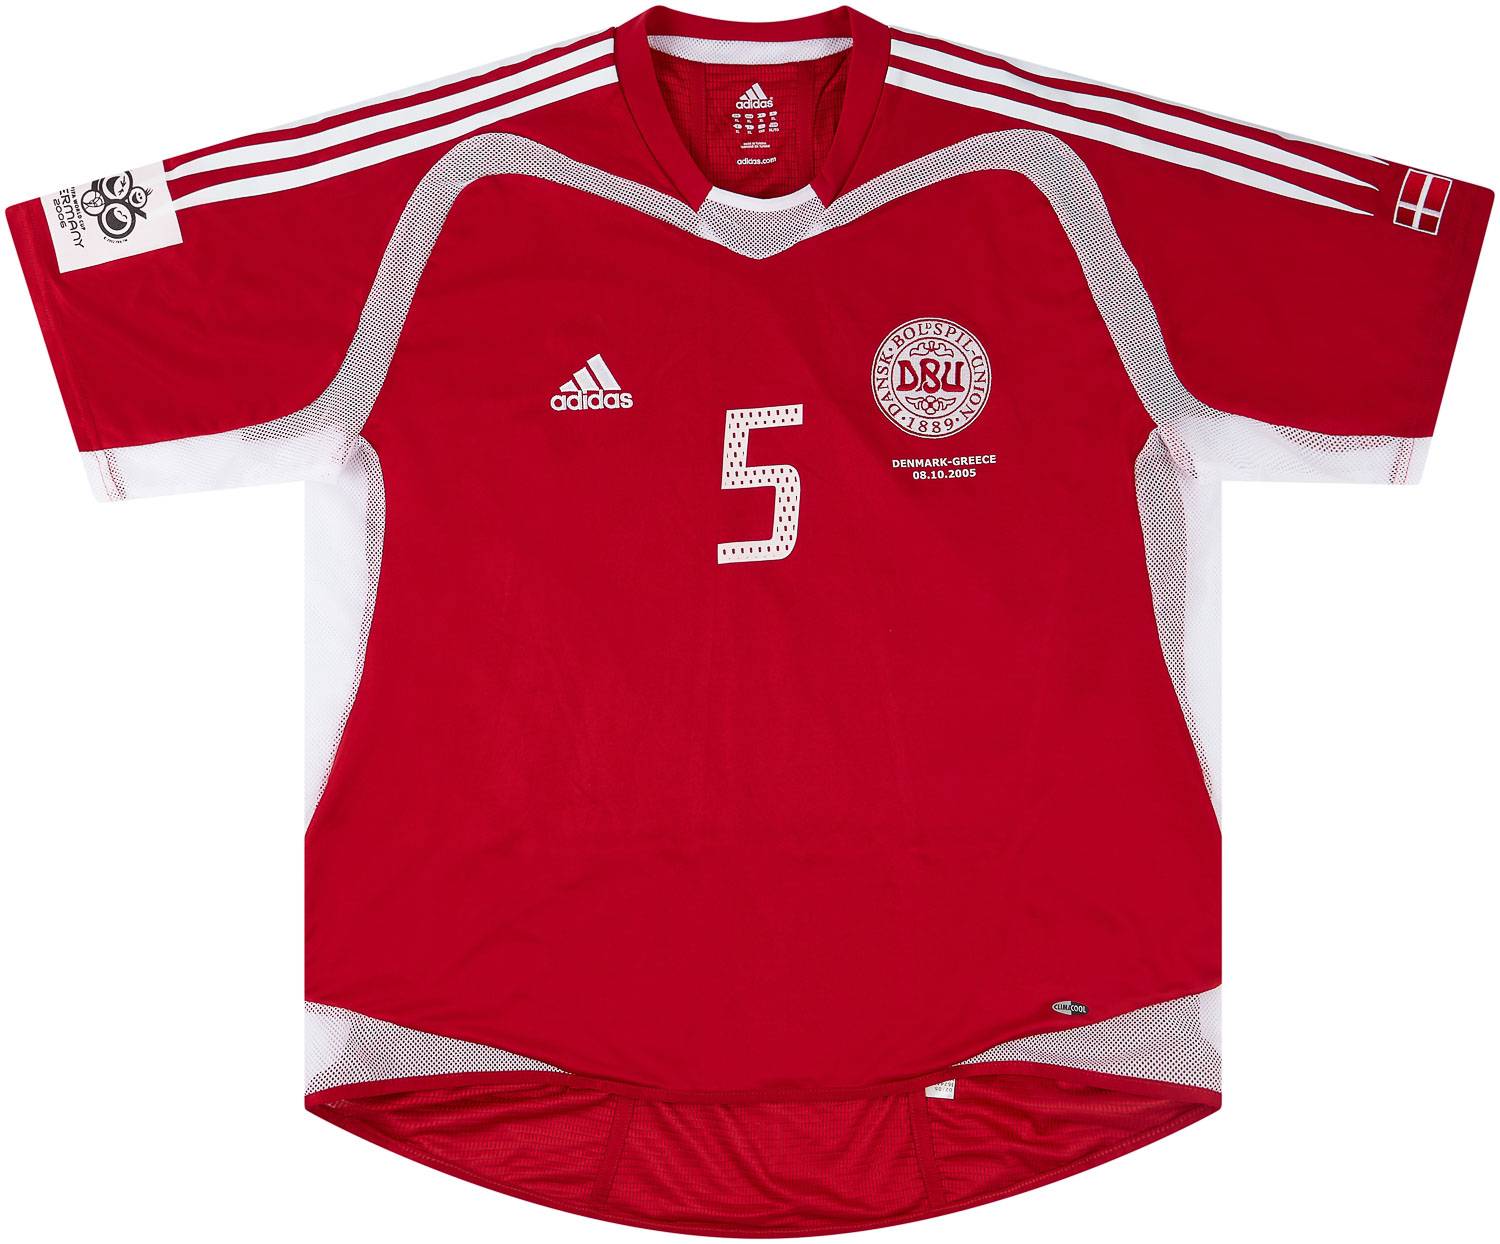 2005 Denmark Match Issue Home Shirt #5 (Jensen) v Greece